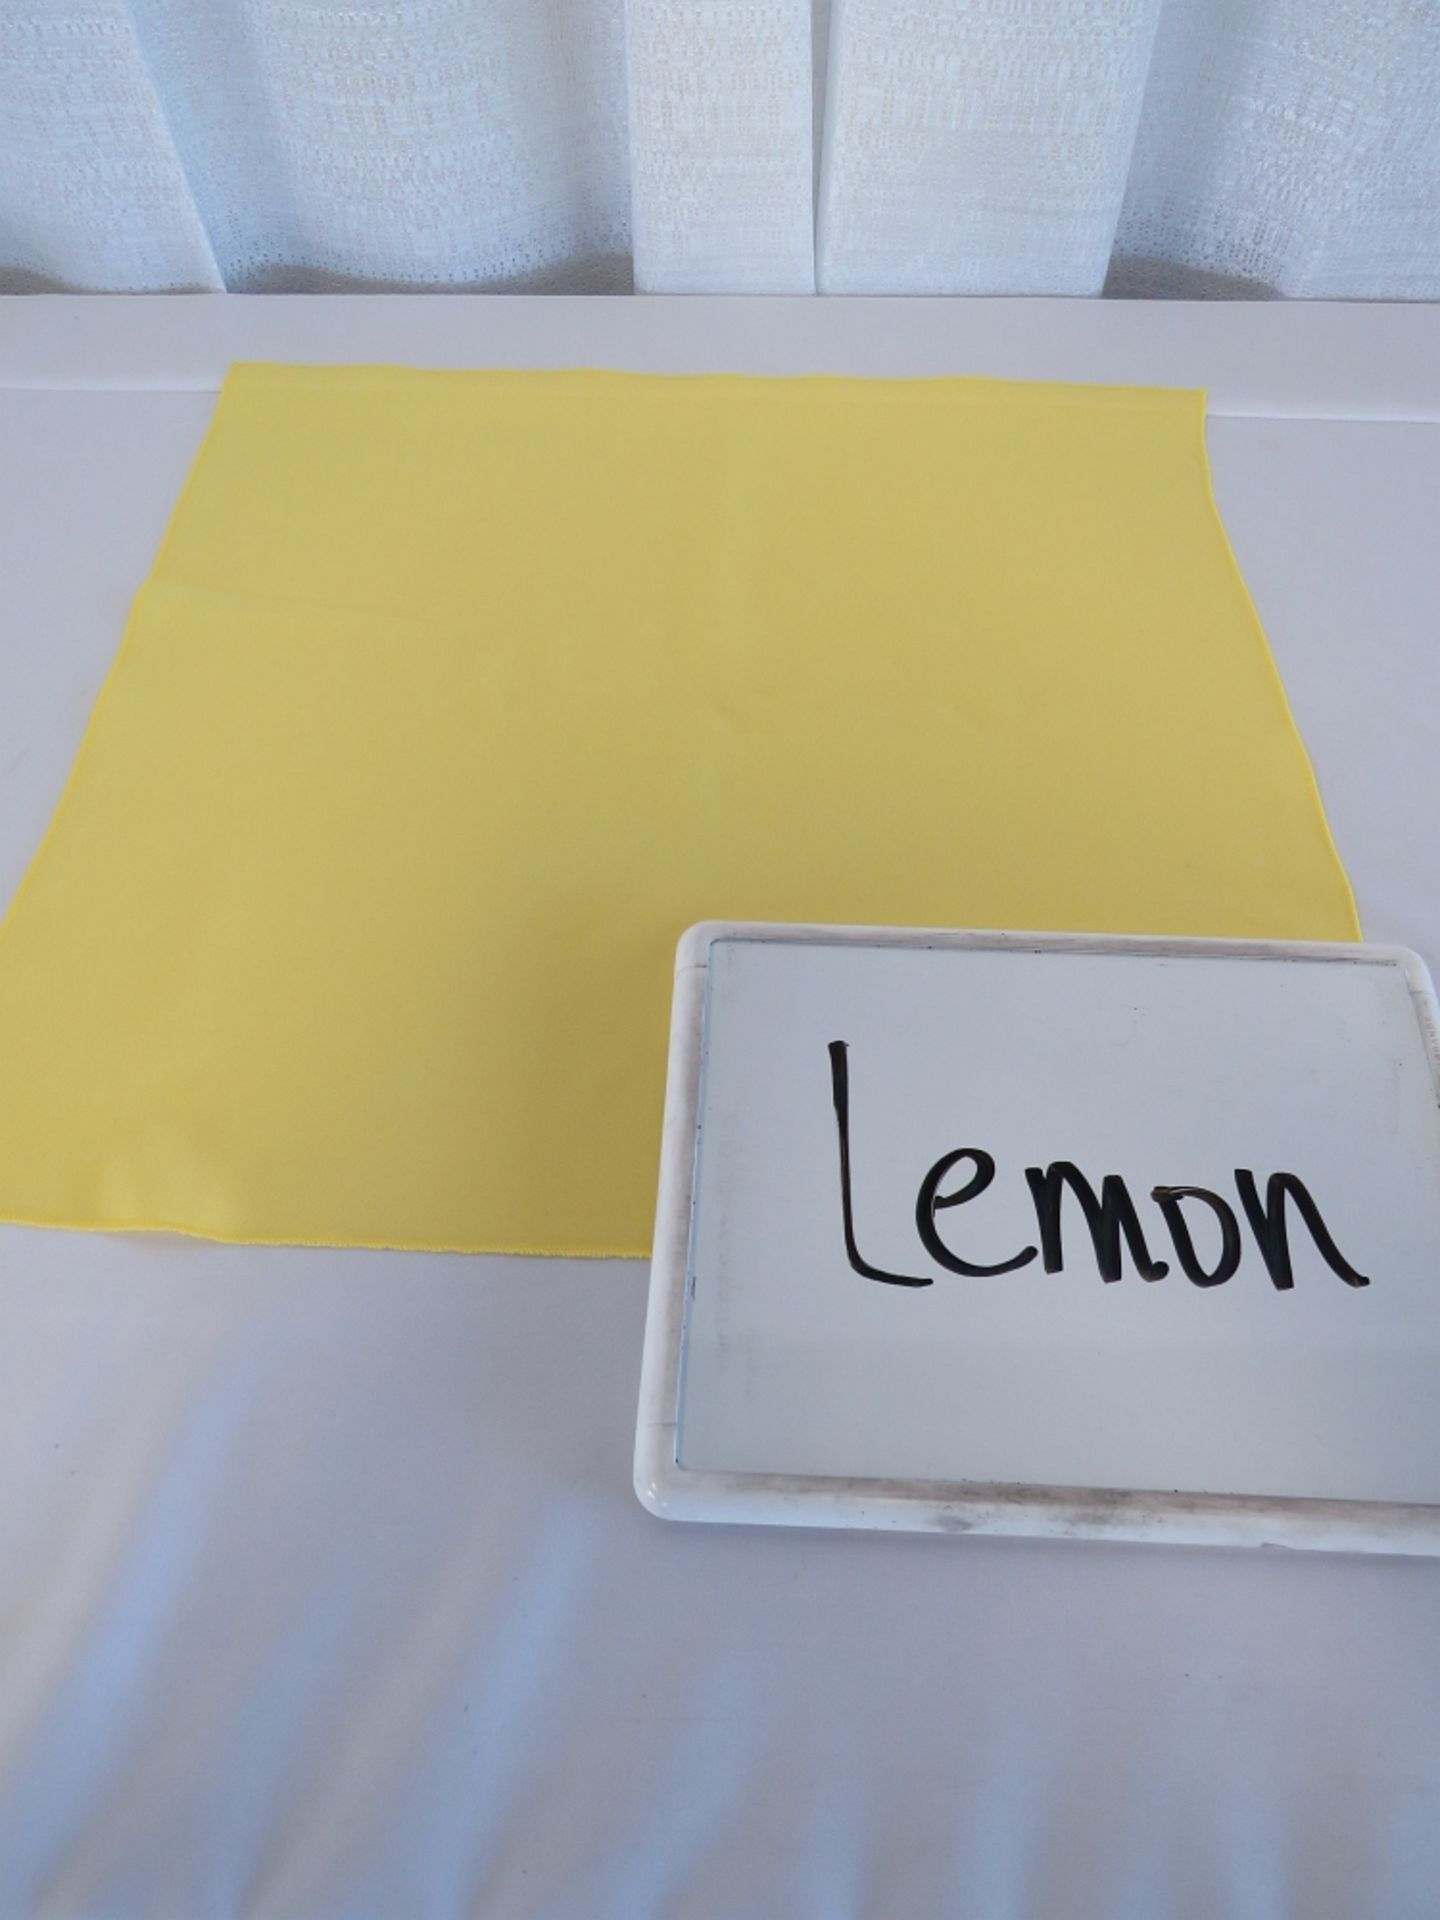 60" x 120" Tablecloth, Lemon Yellow